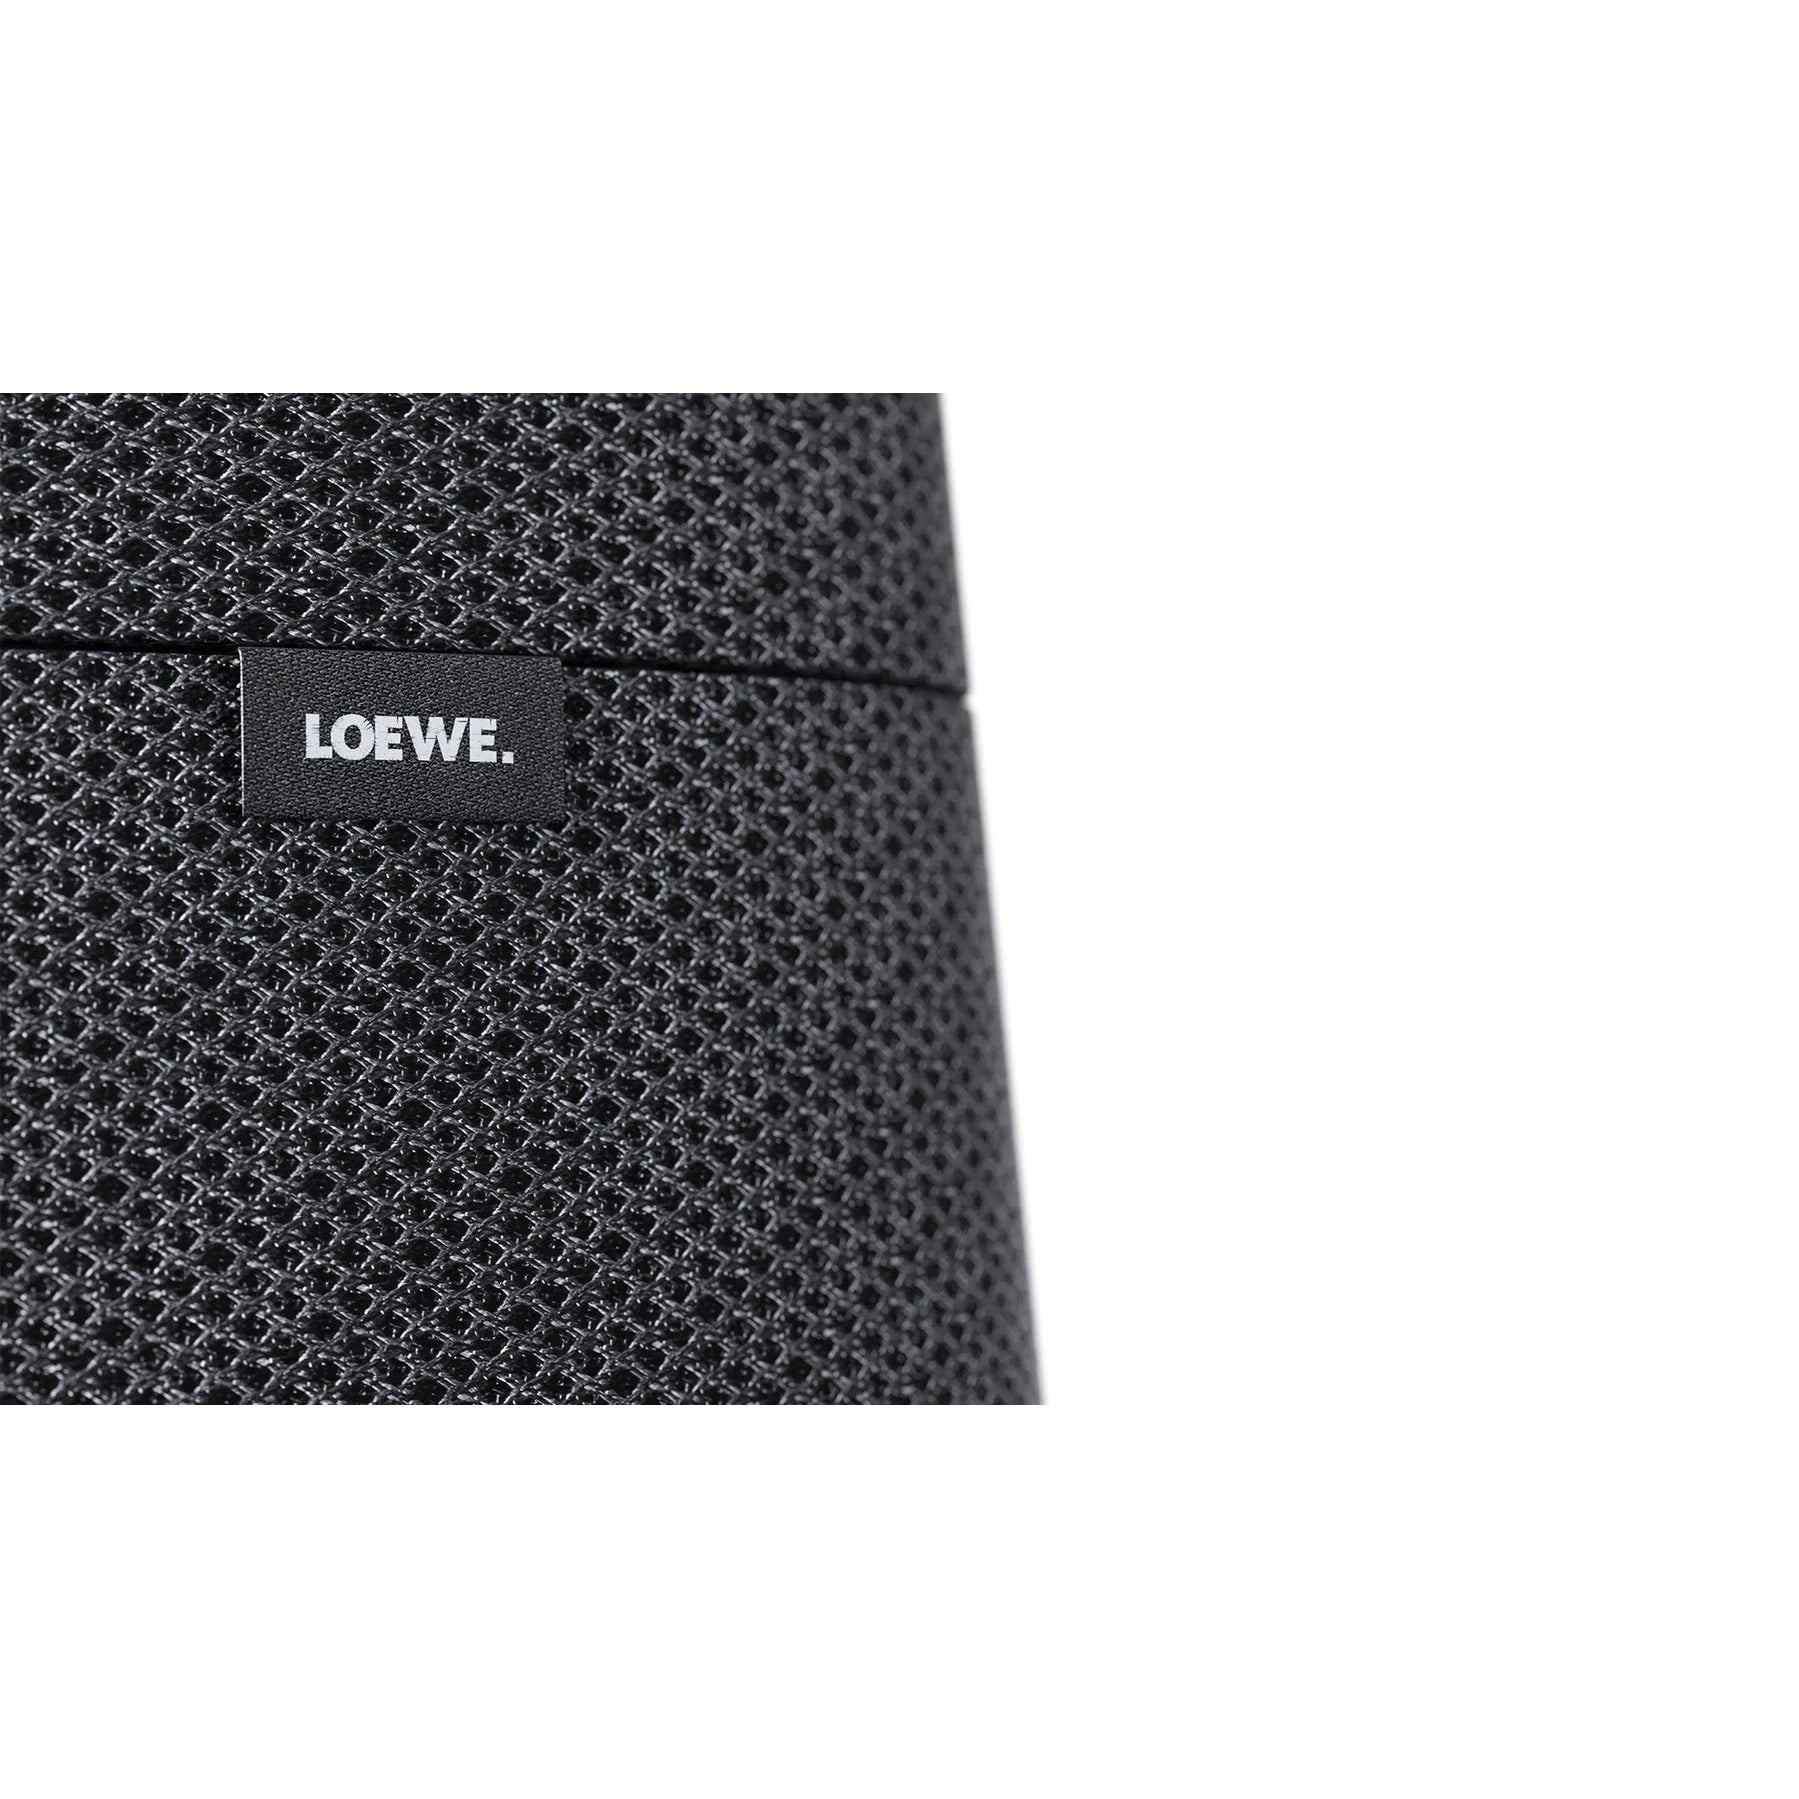 Loewe - Klang MR 3 - Multiroom Speaker Australia